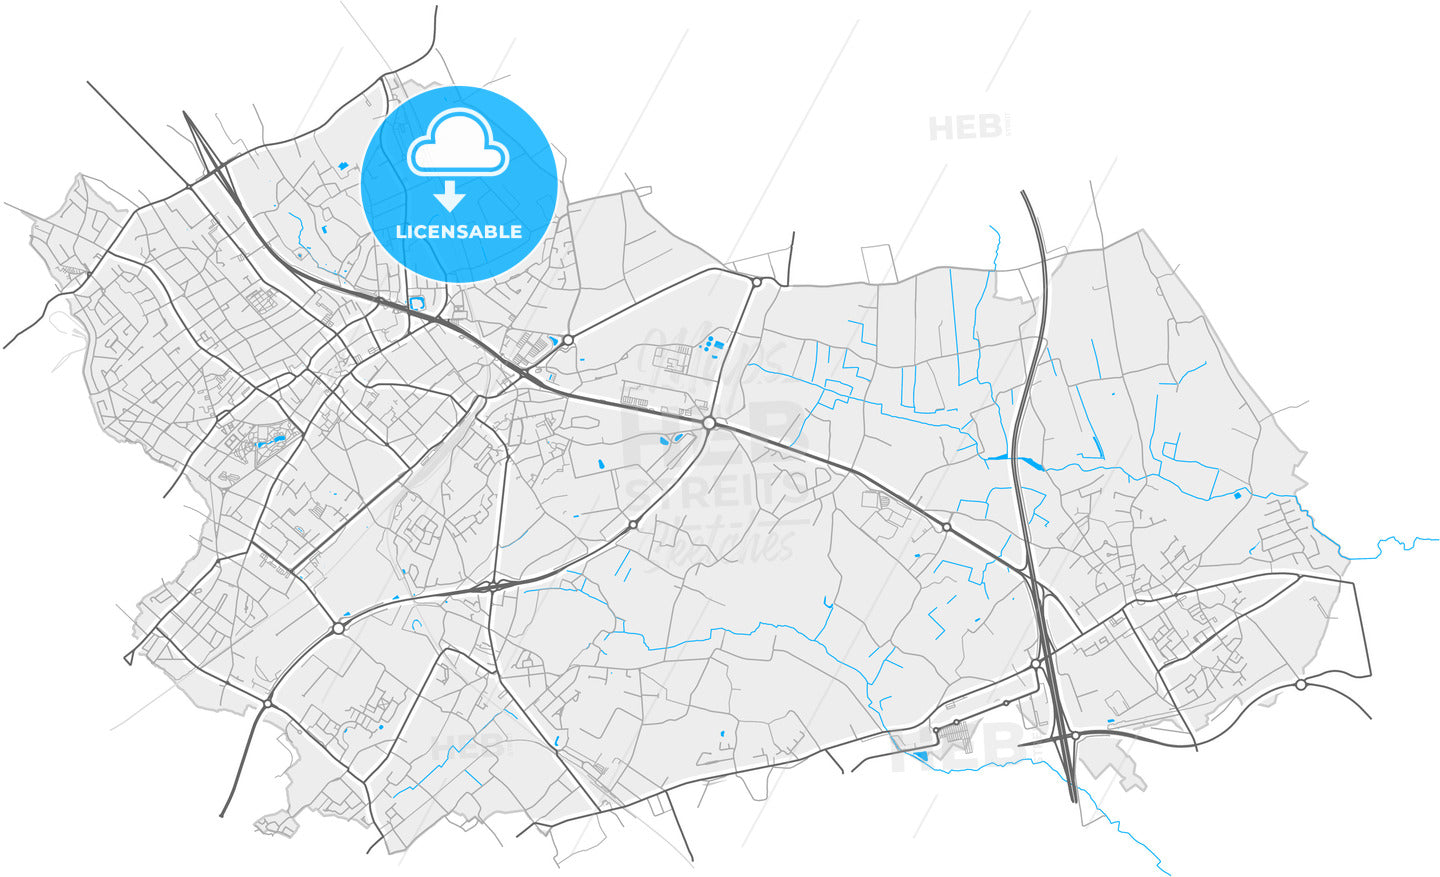 Mouscron, Hainaut, Belgium, high quality vector map